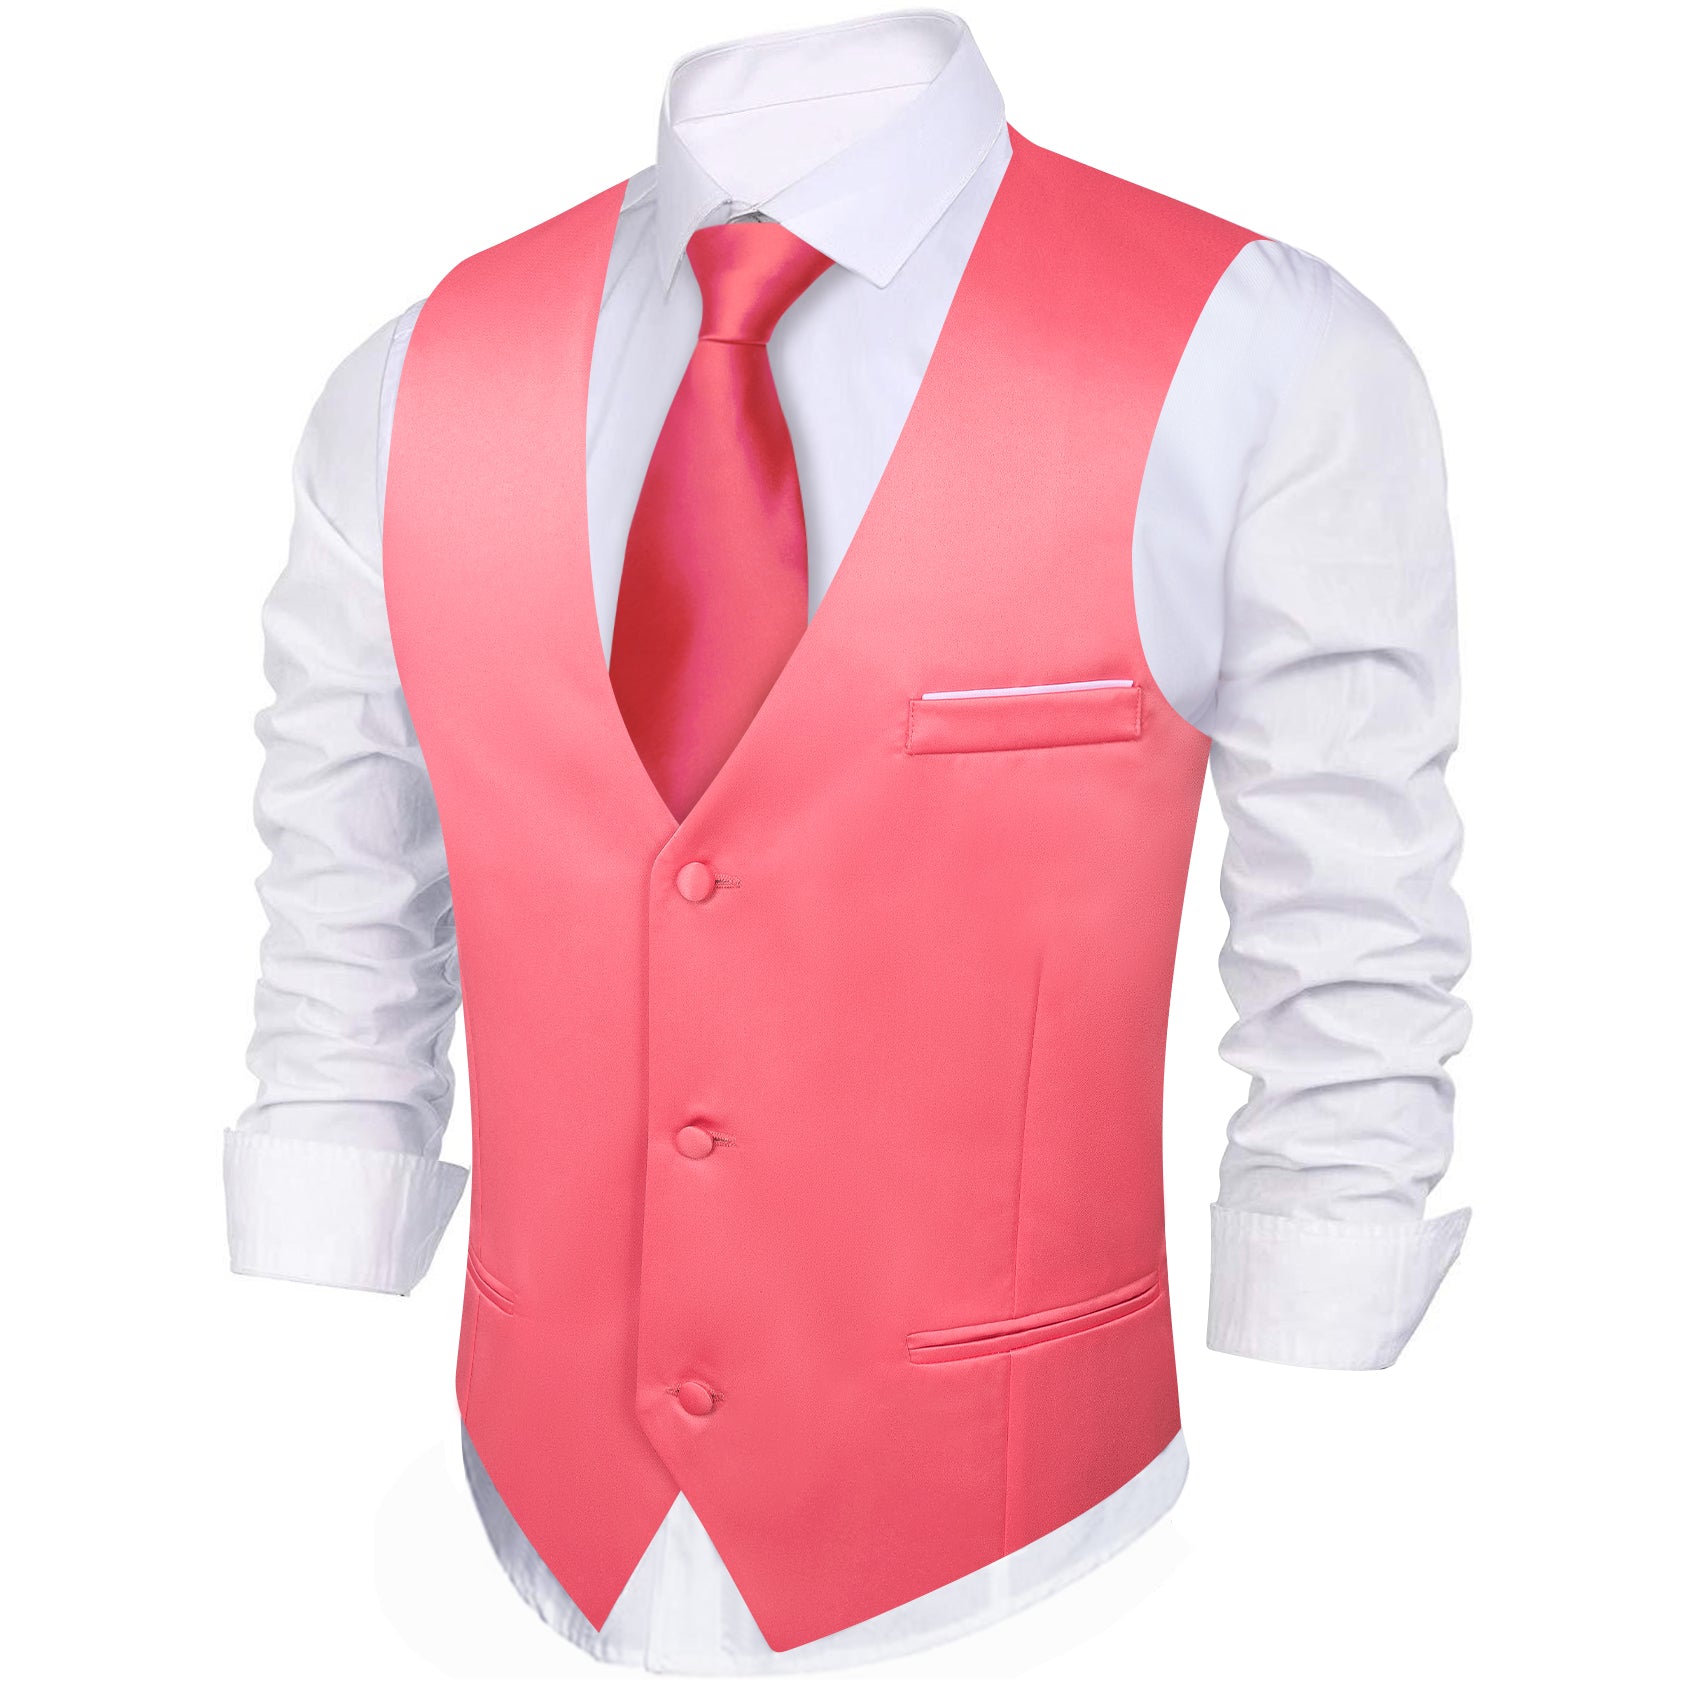 Barry.wang Shock Pink Solid Business Vest Suit